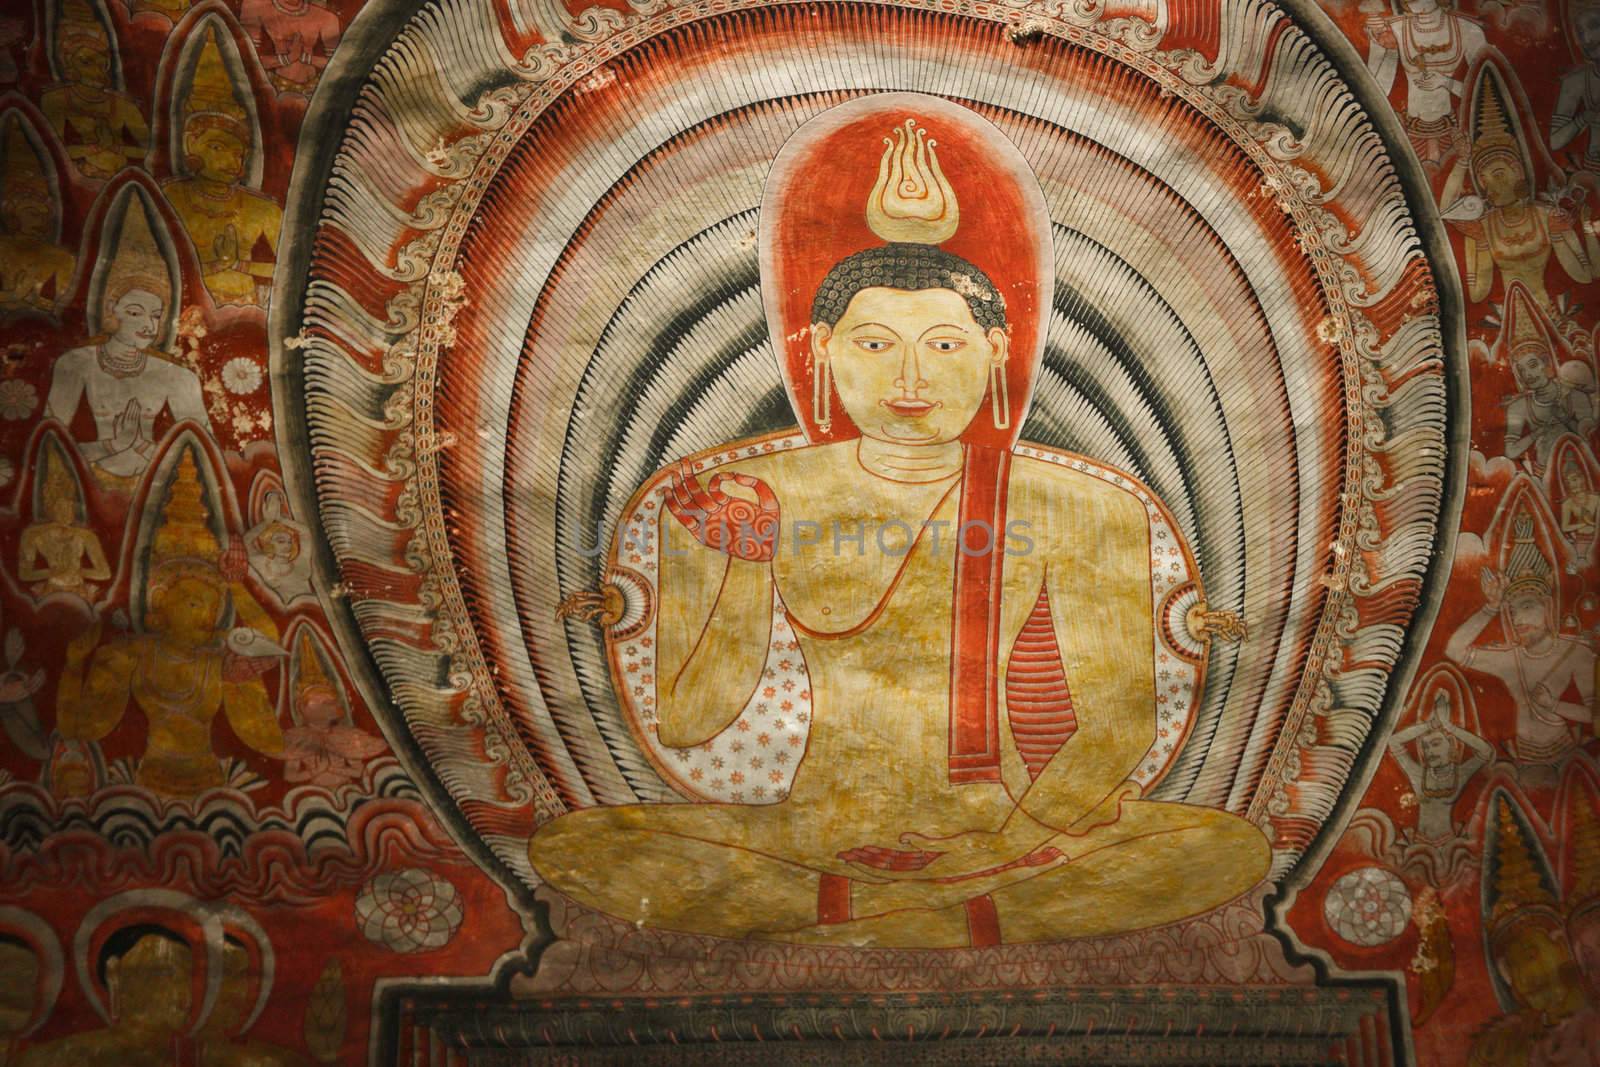 Ancient Buddha image in Dambulla Rock Temple caves, Sri Lanka by dimol